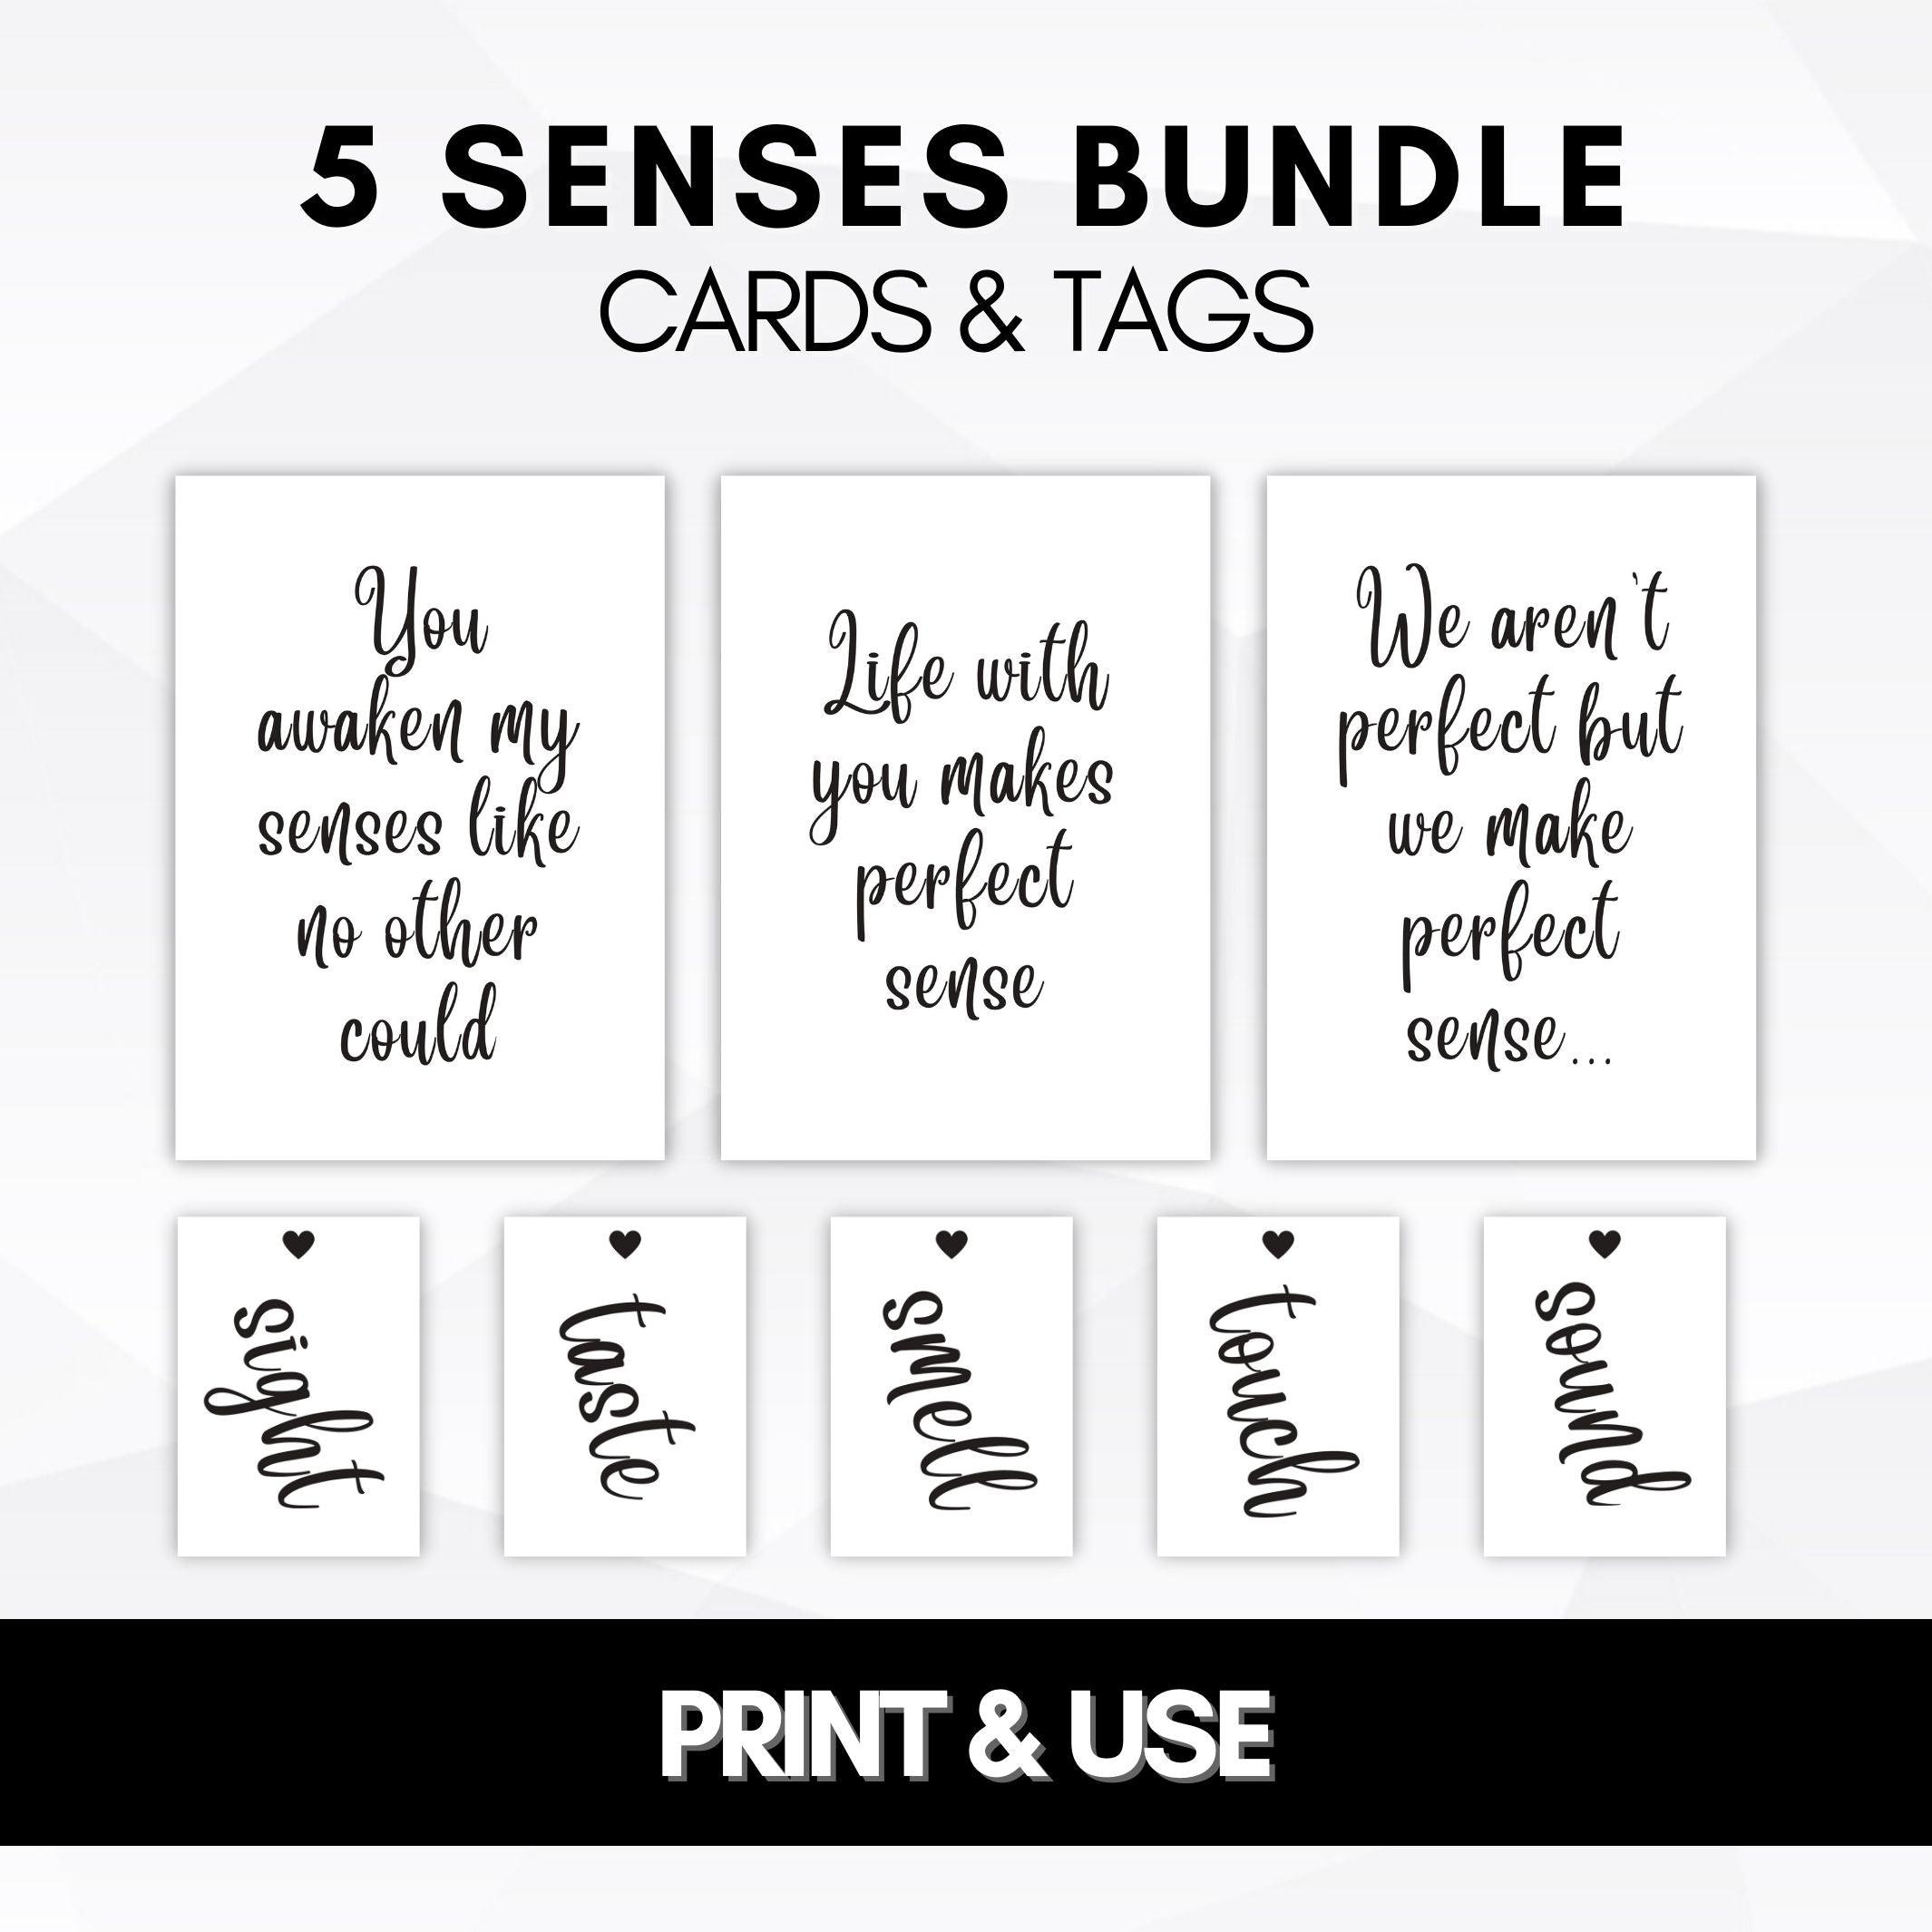 Five Senses Gift Tags & Card. 5 Senses Instant Download Printable